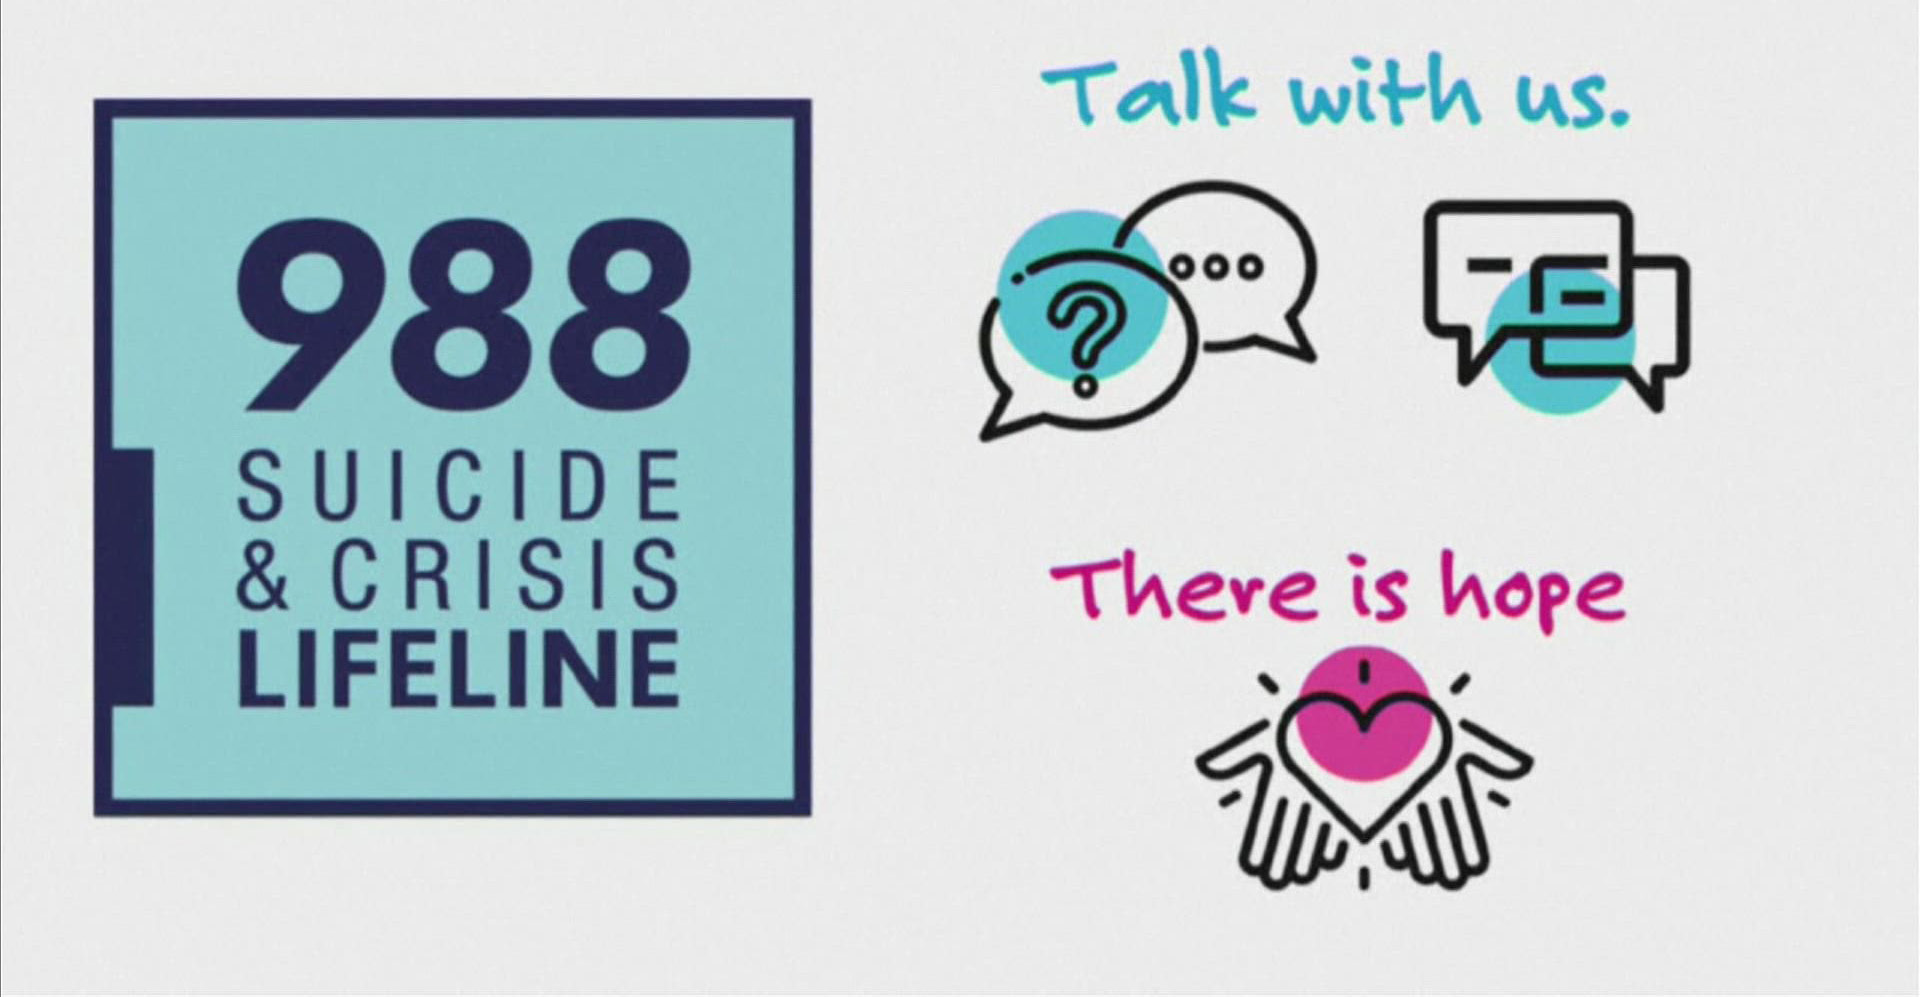 Check out our April Issue Brief: 988 Suicide & Crisis Lifeline